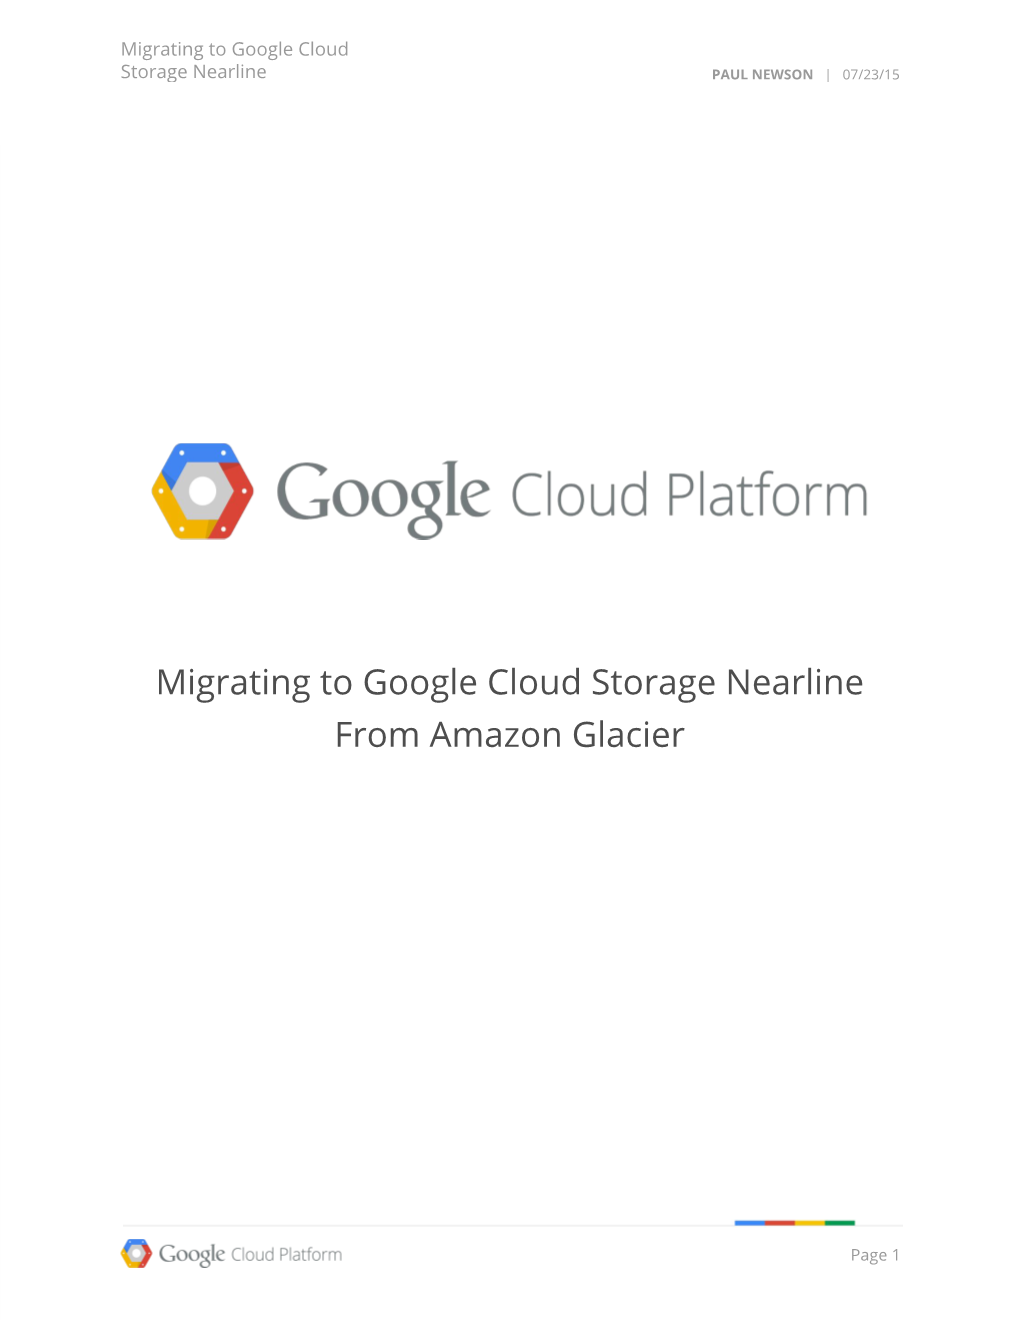 Migrating to Google Cloud Storage Nearline from Amazon Glacier